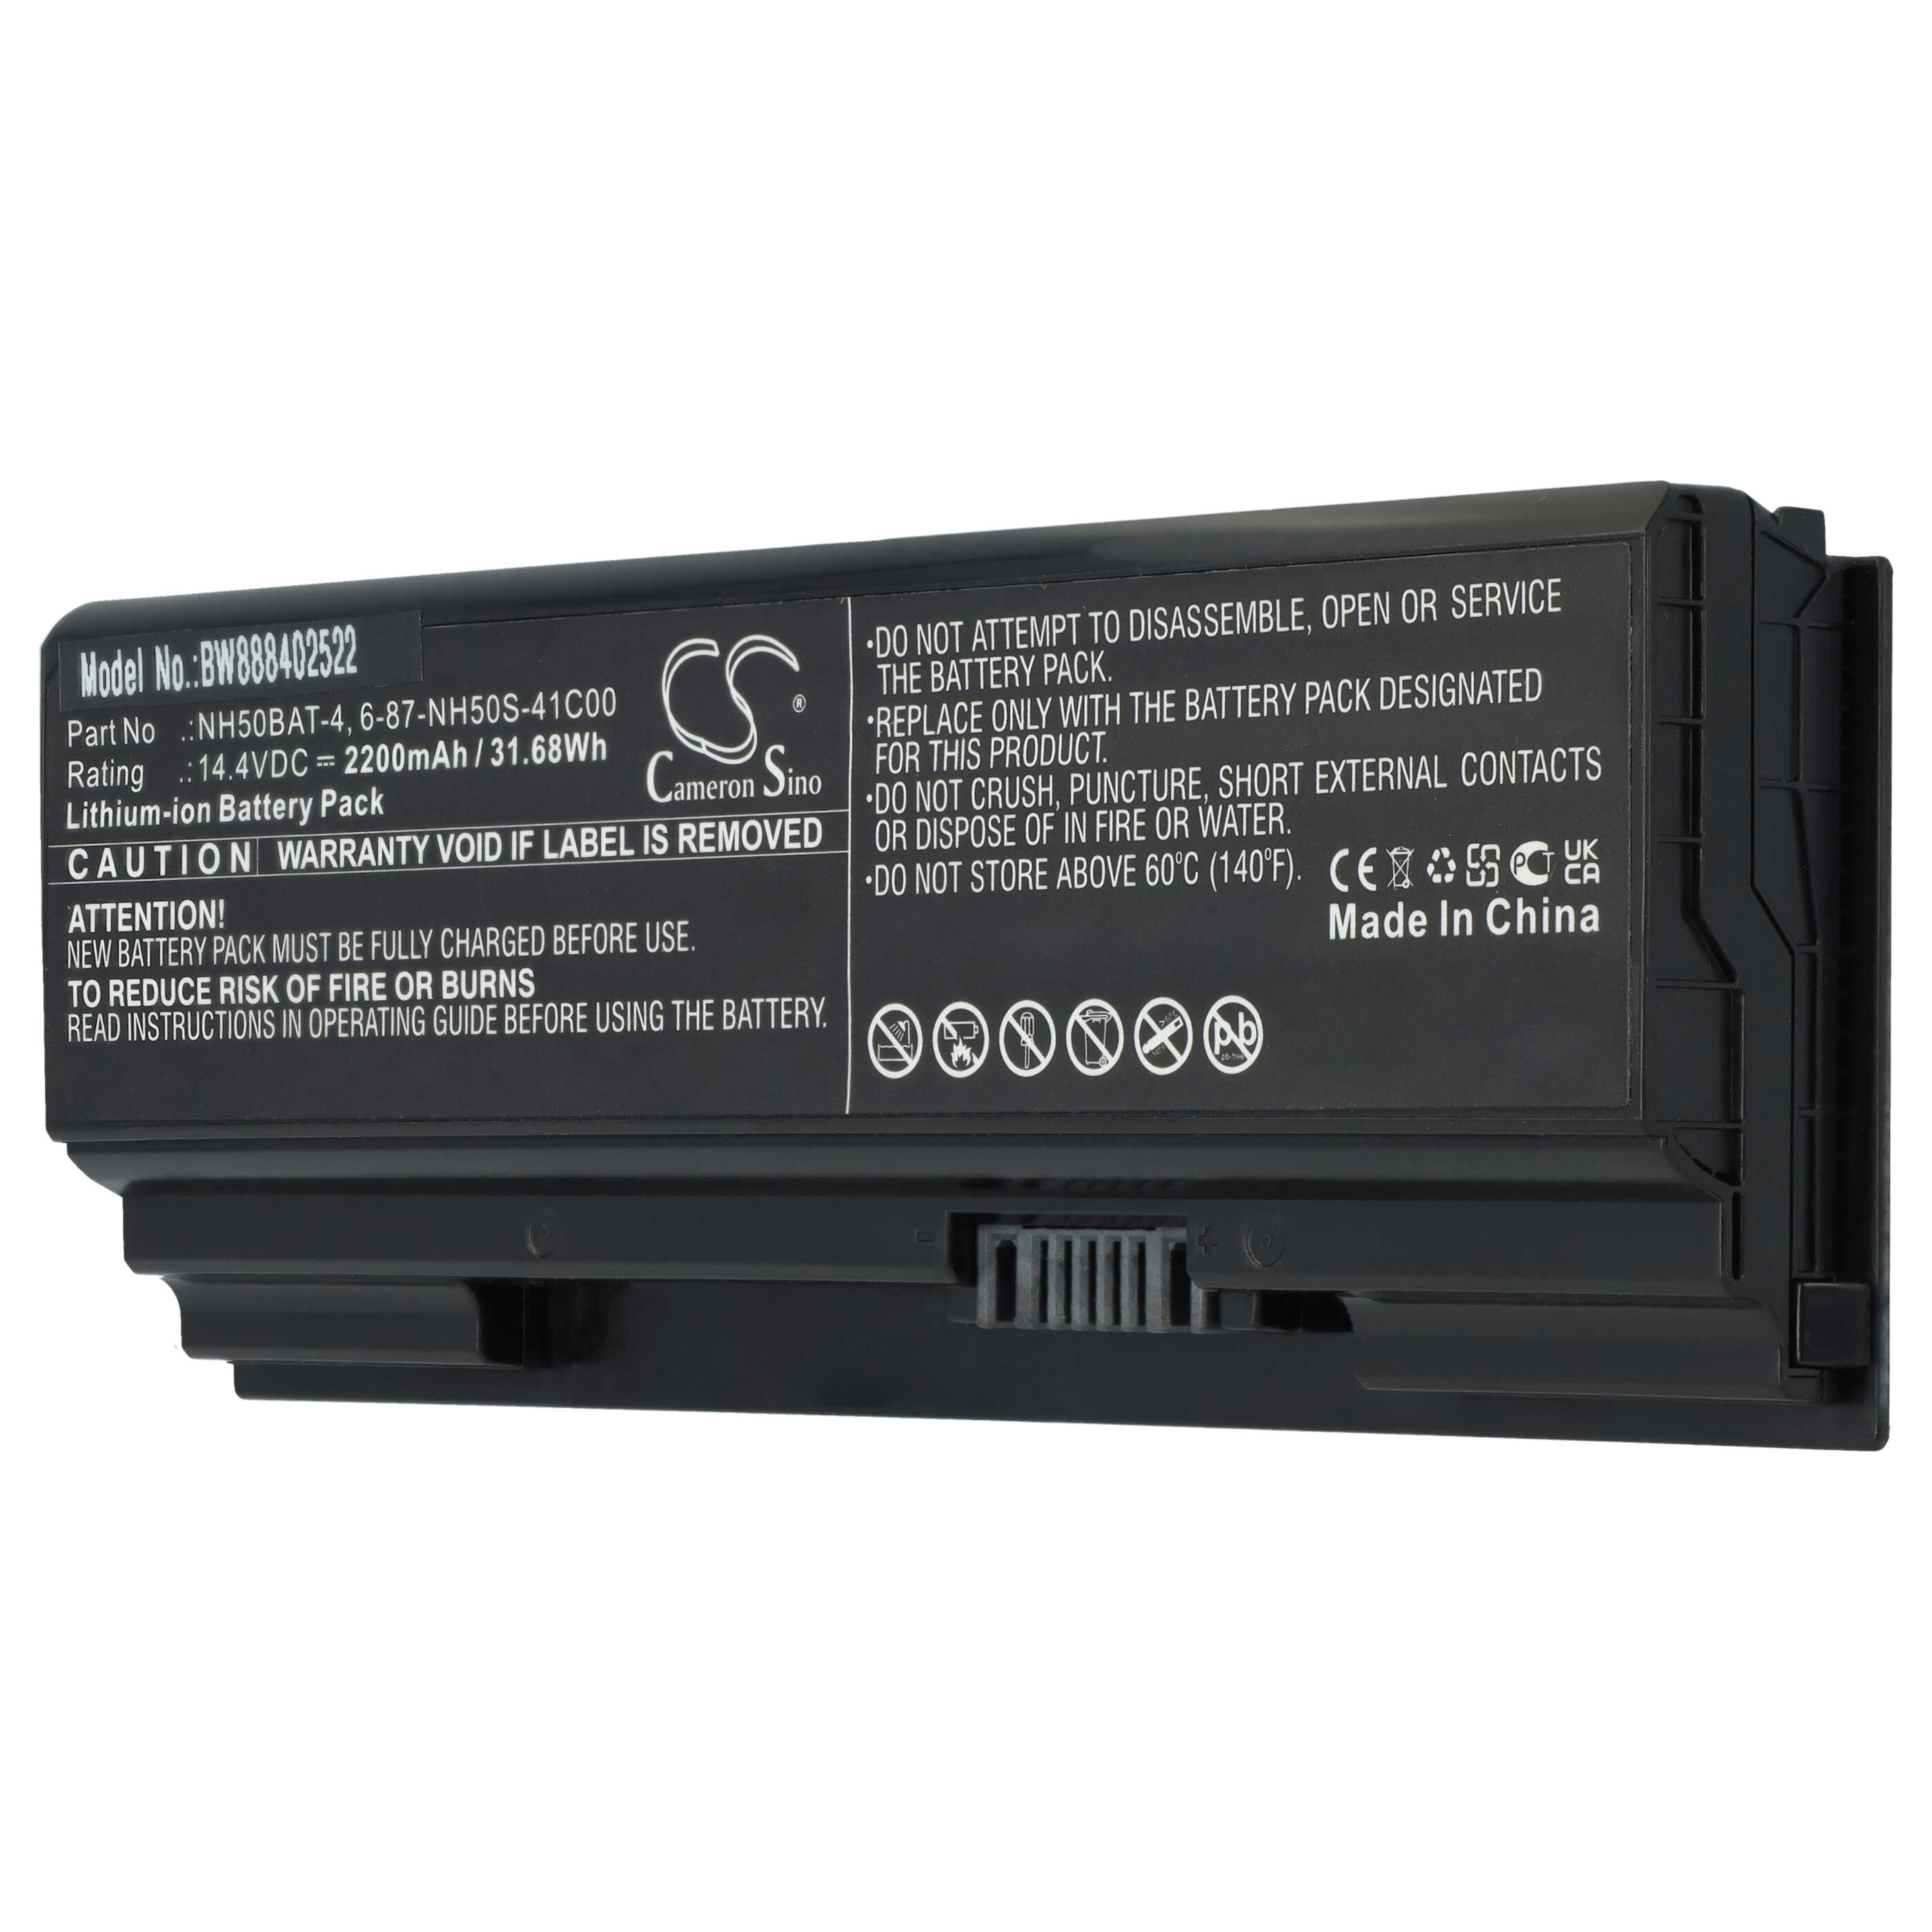 Notebook Battery Replacement for Aorus 6-87-NH50S-41C00, NH50BAT-4 - 2200mAh 14.4V Li-Ion